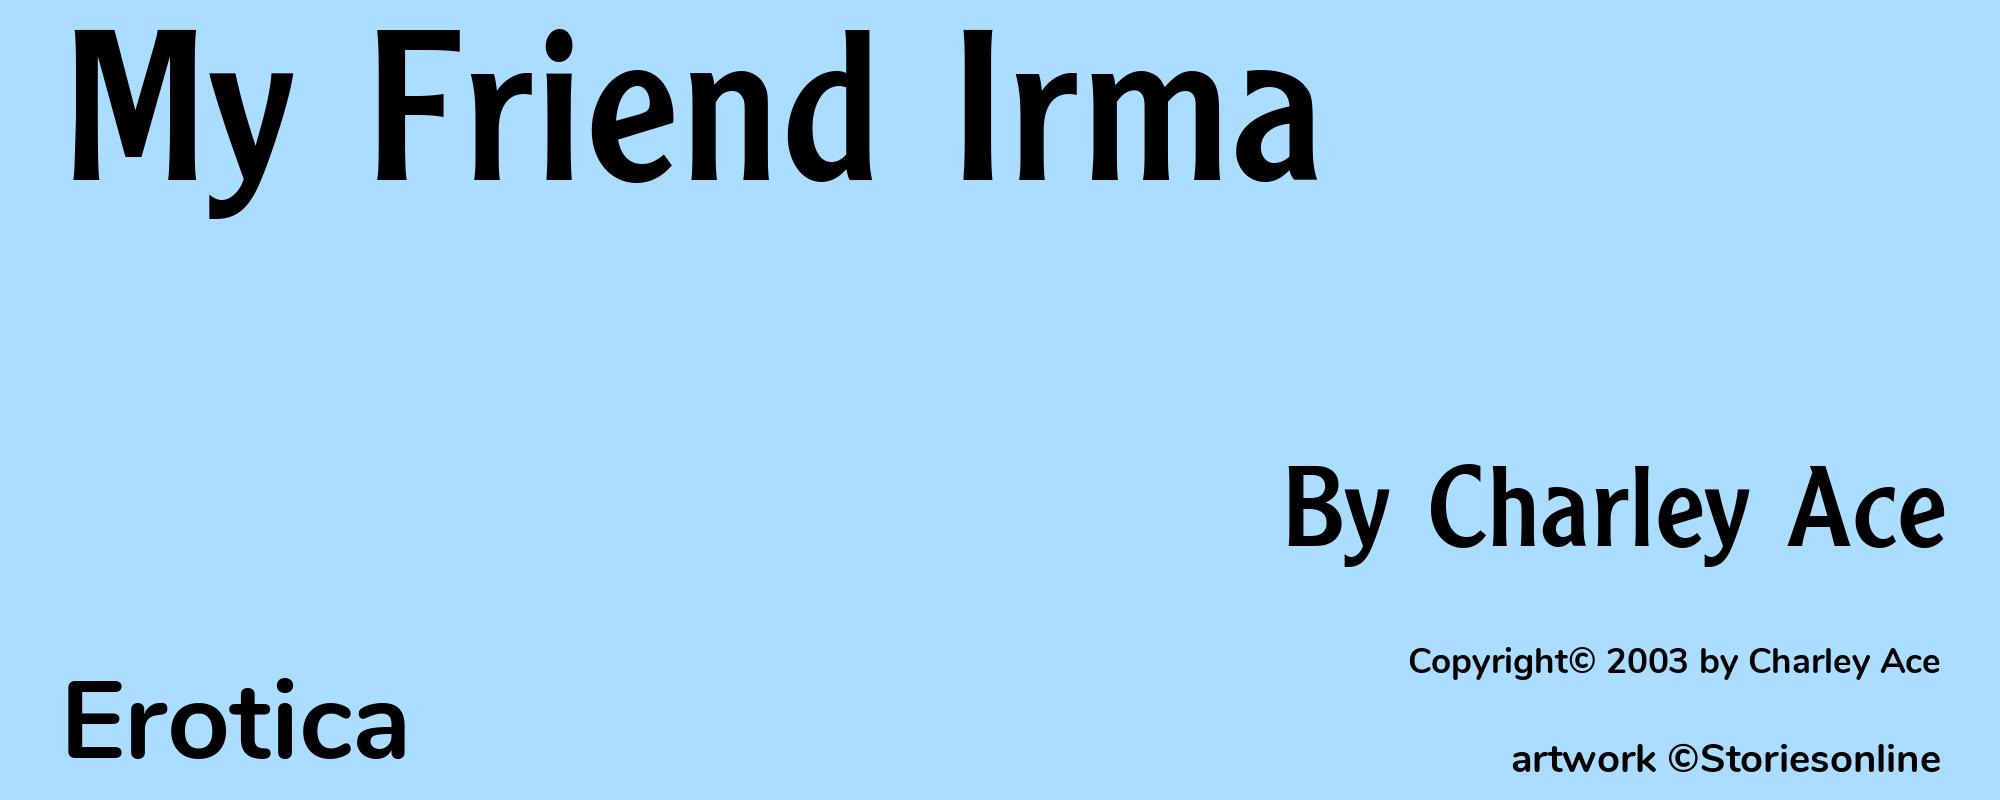 My Friend Irma - Cover